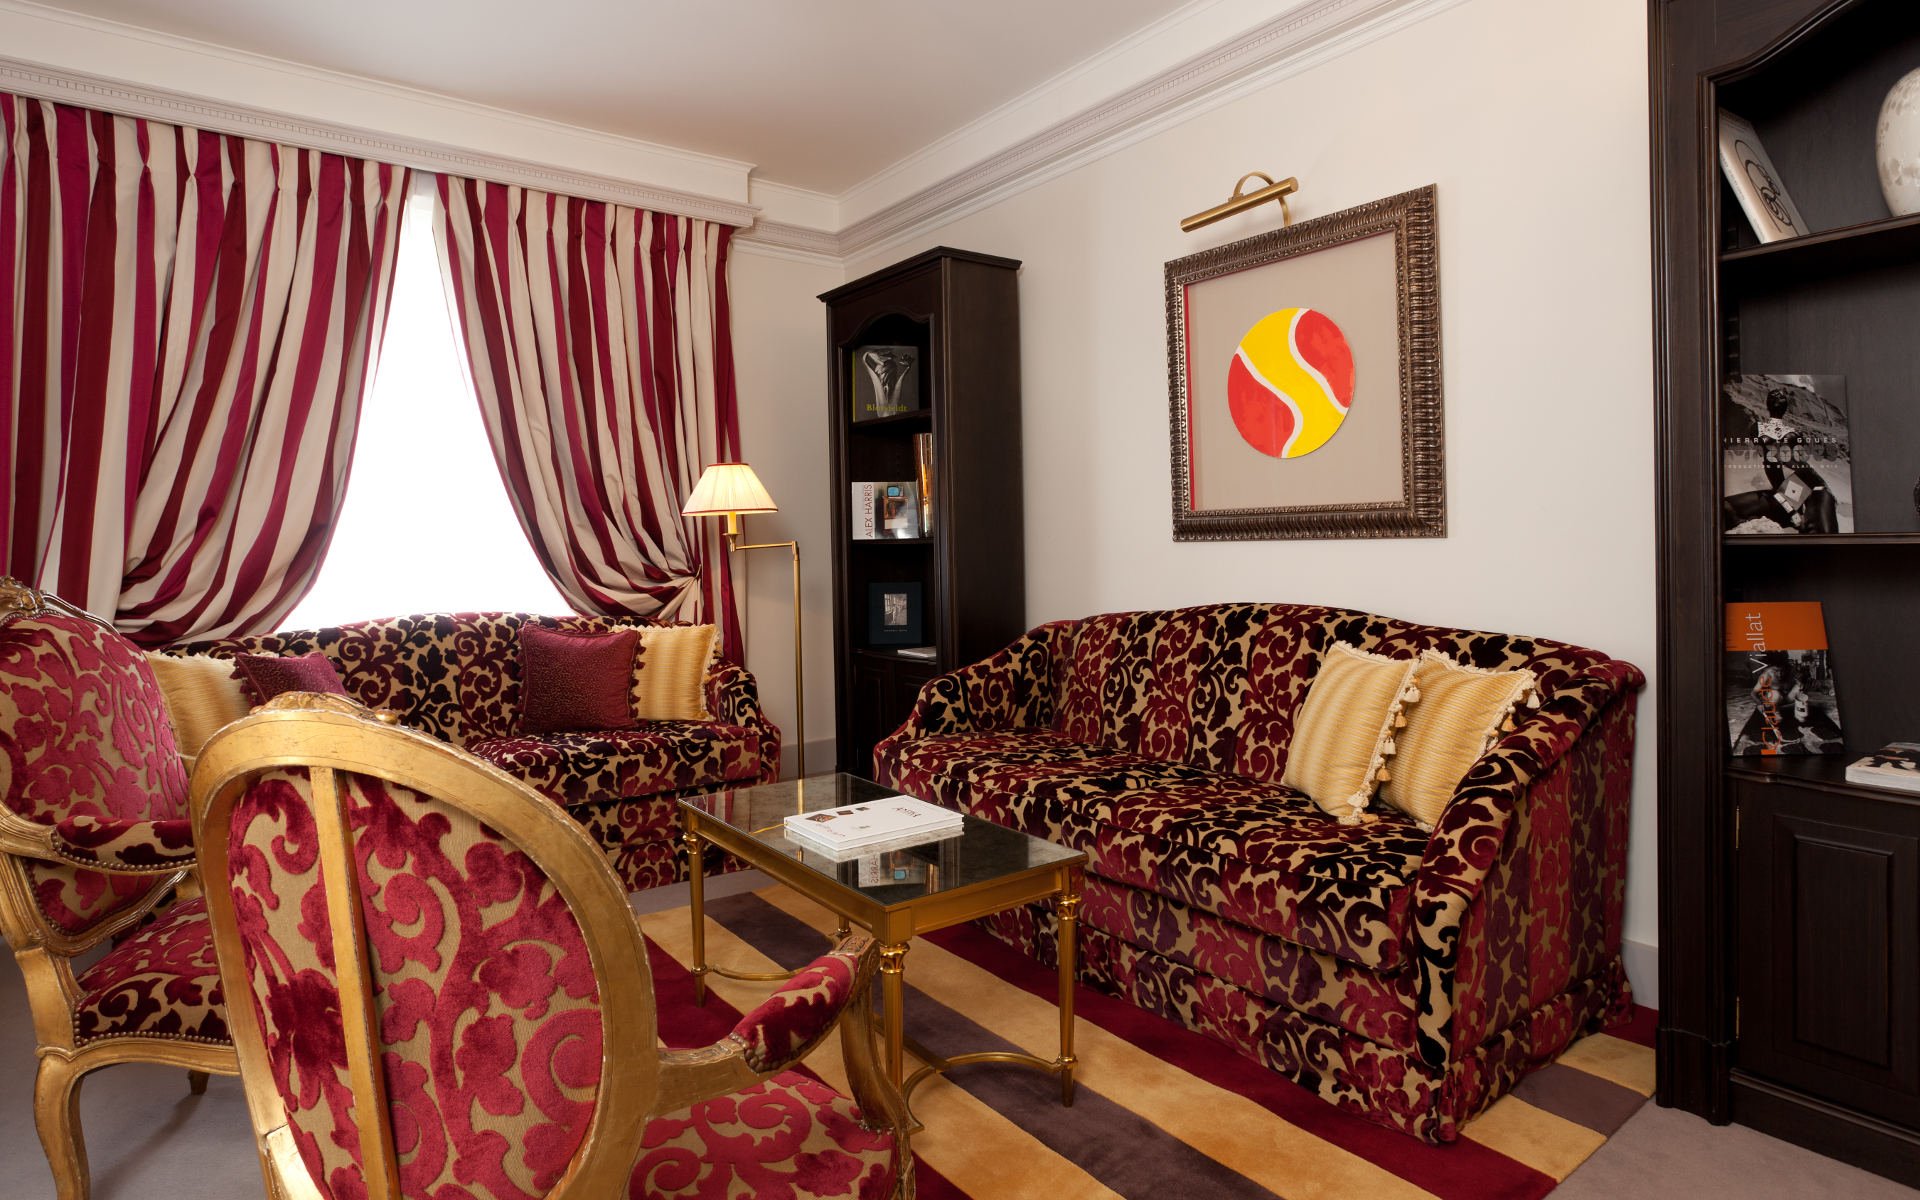 260/Suites/Suite majestic/Suite Majestic - Living Room 1 -  Majestic Hotel-Spa.jpg